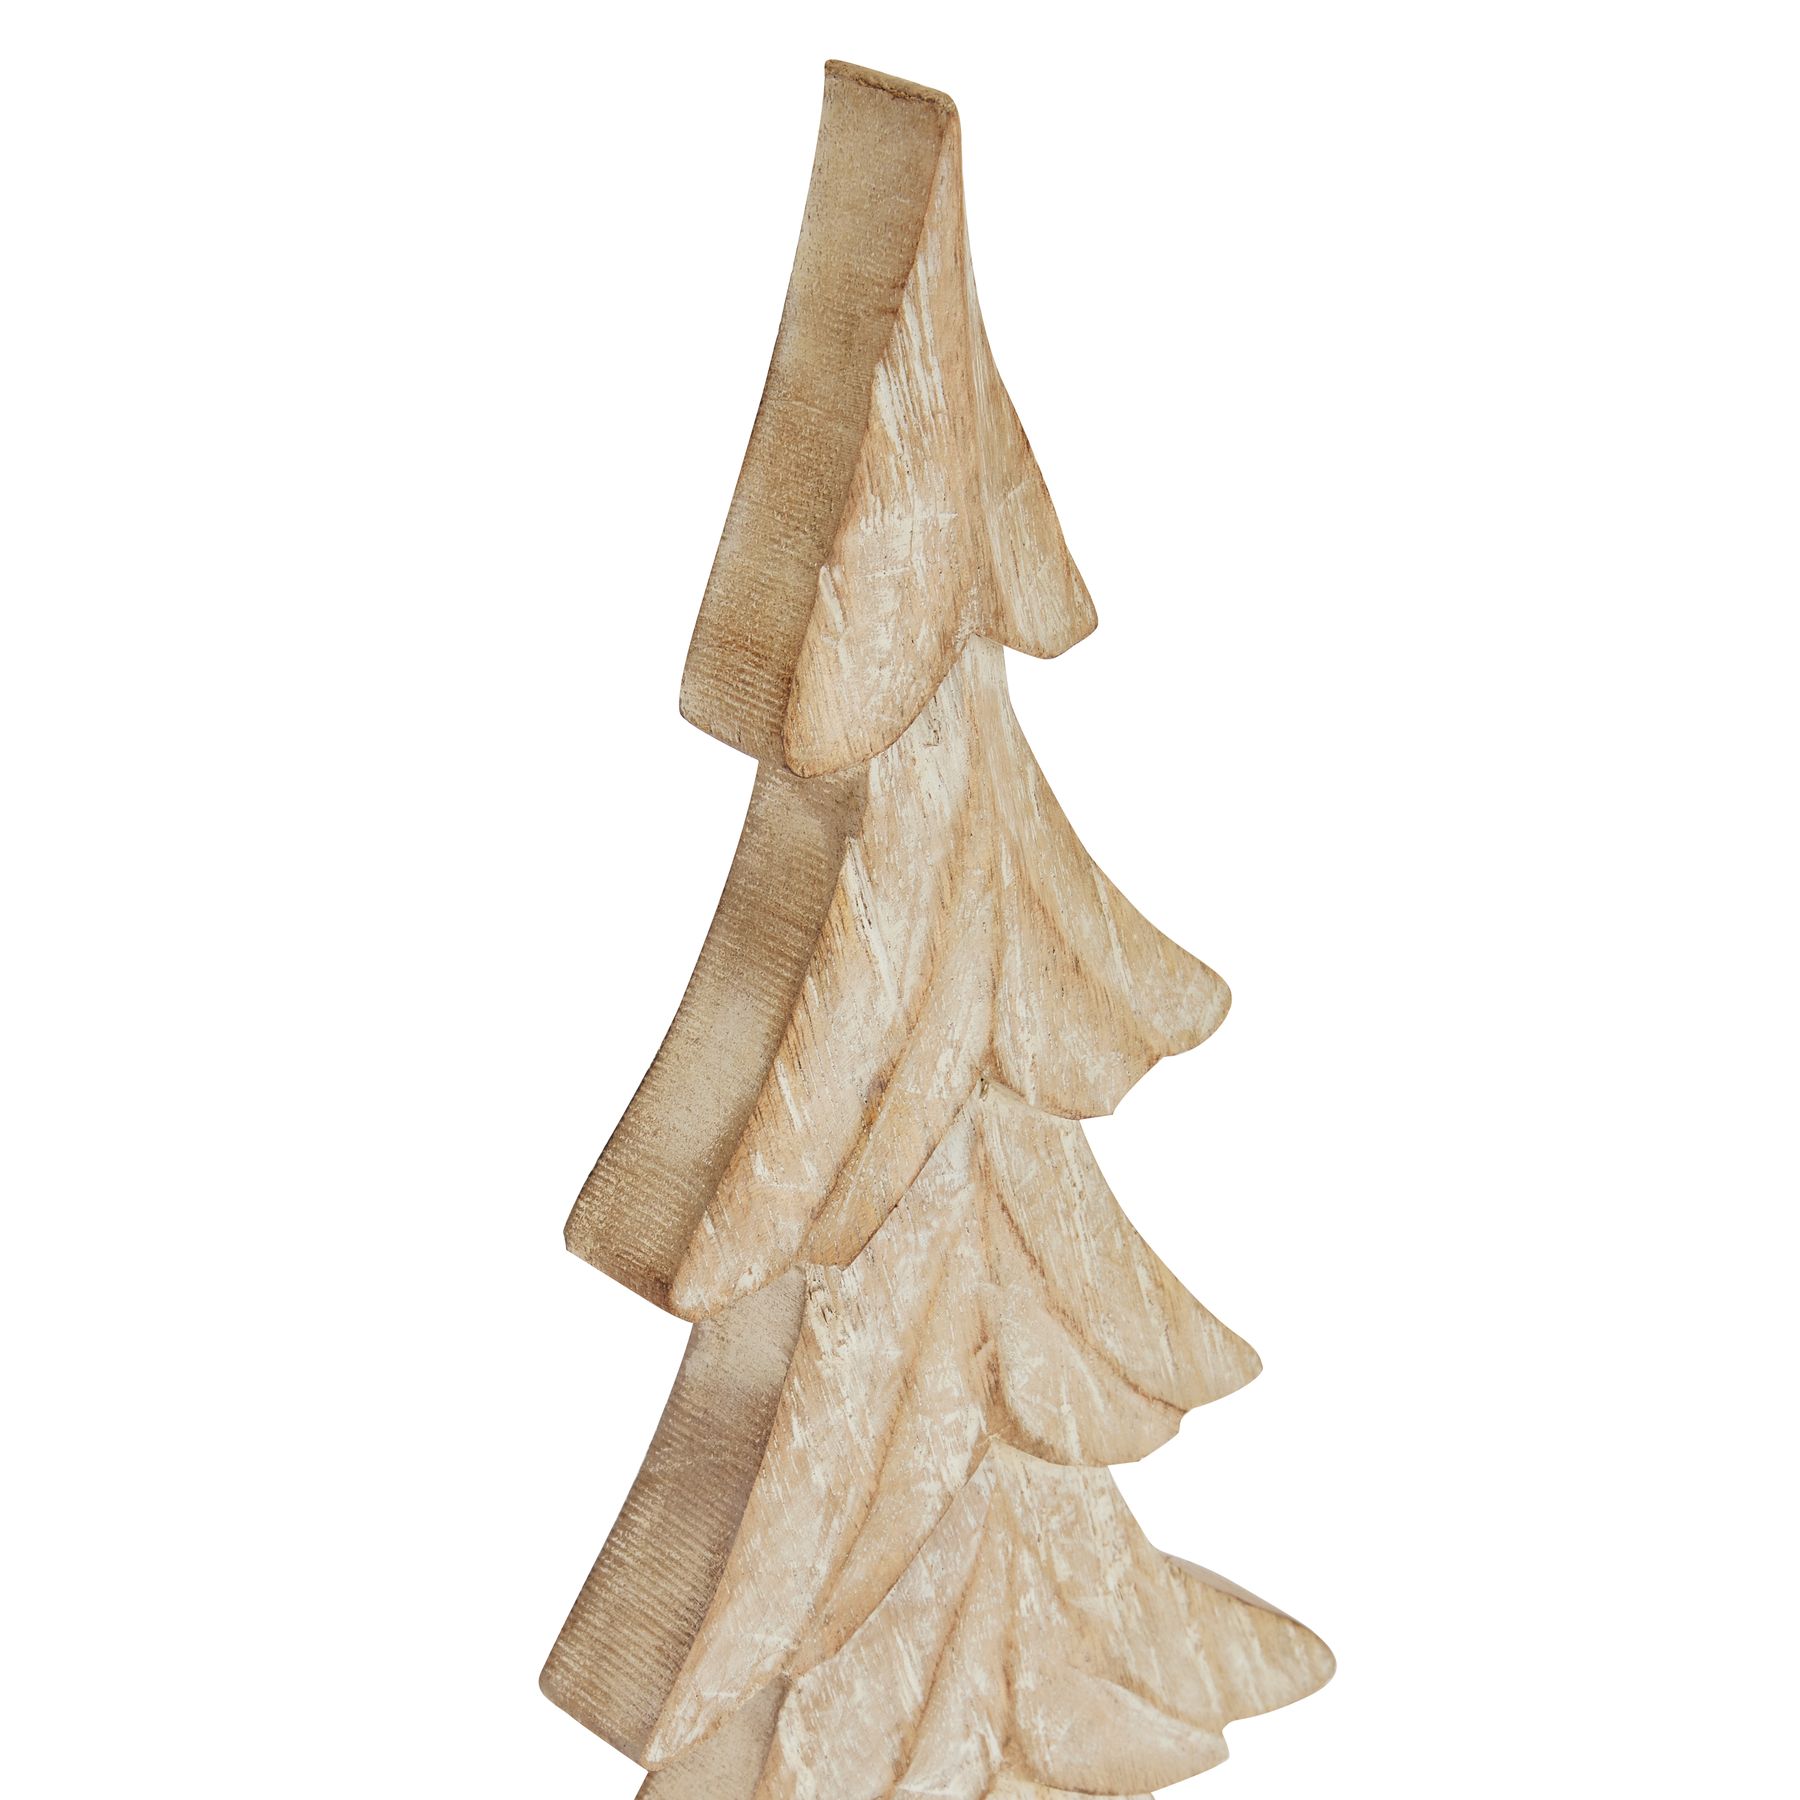 Carved Wood Christmas Tree - Image 2